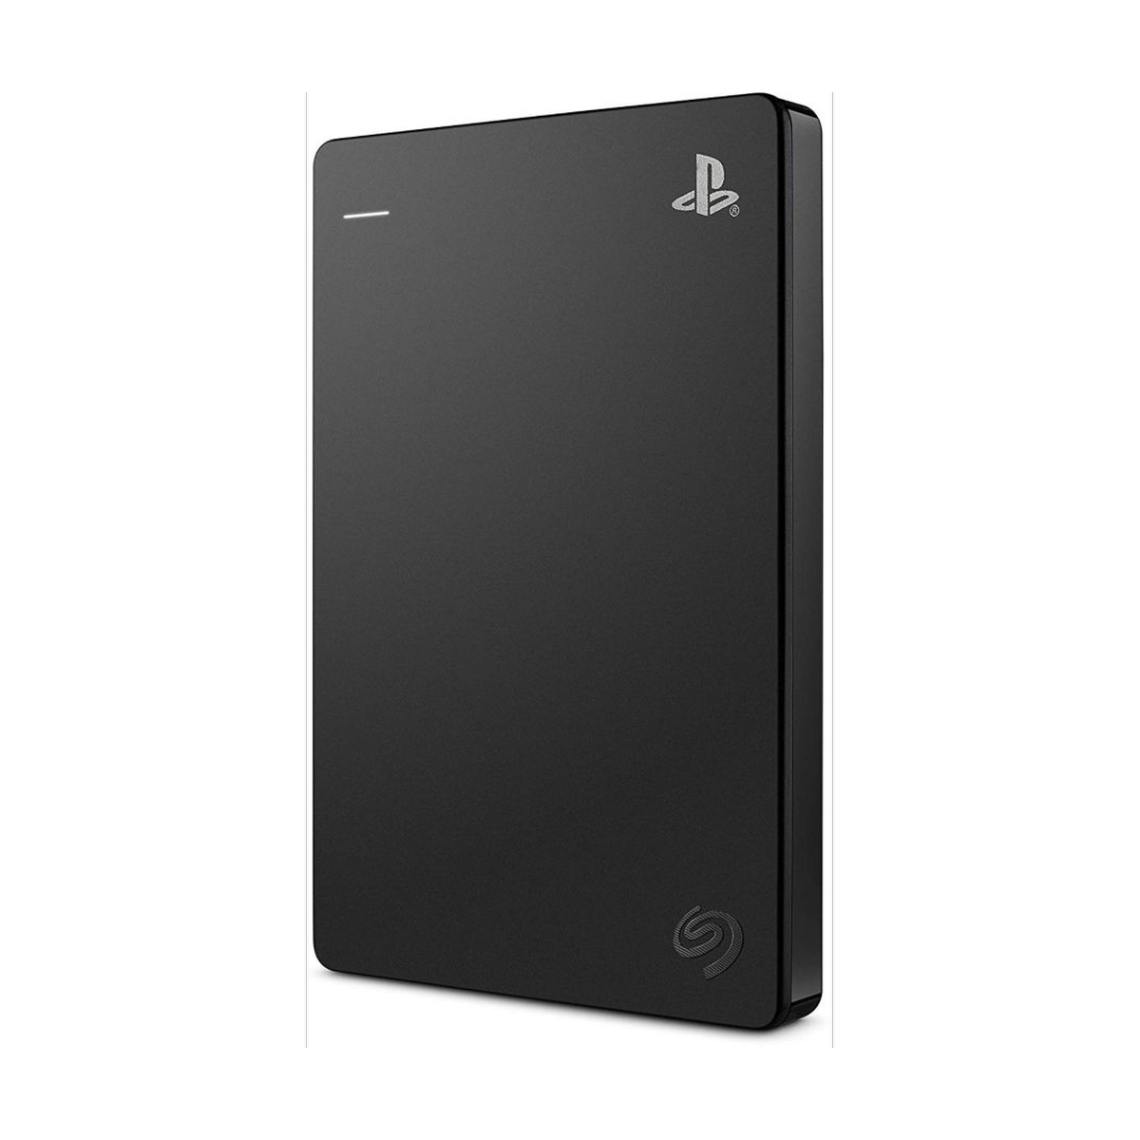 Game Drive pour PS4 2To - 2.5 USB 3.0 - Noir